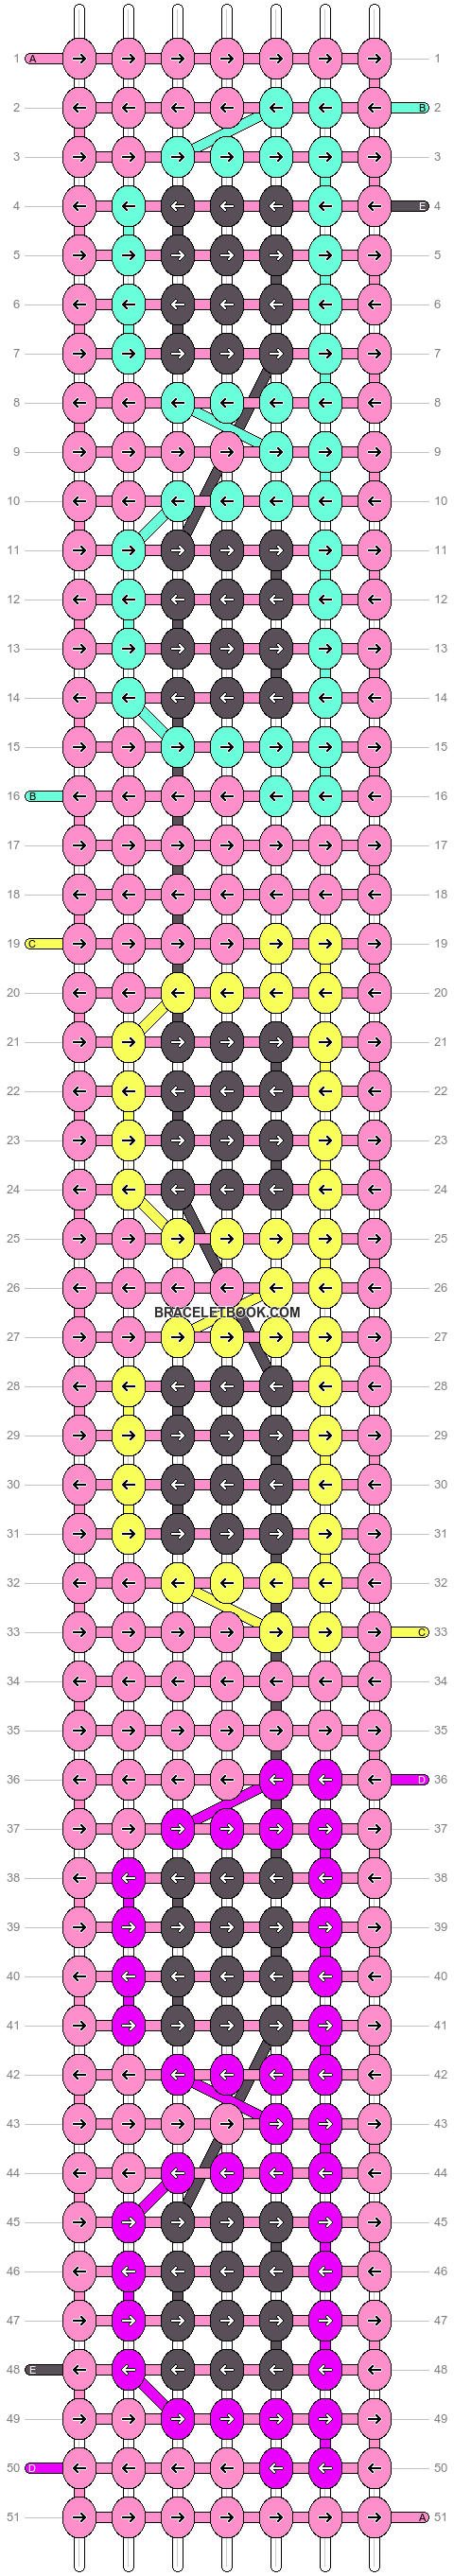 Alpha pattern #18480 variation #50138 pattern